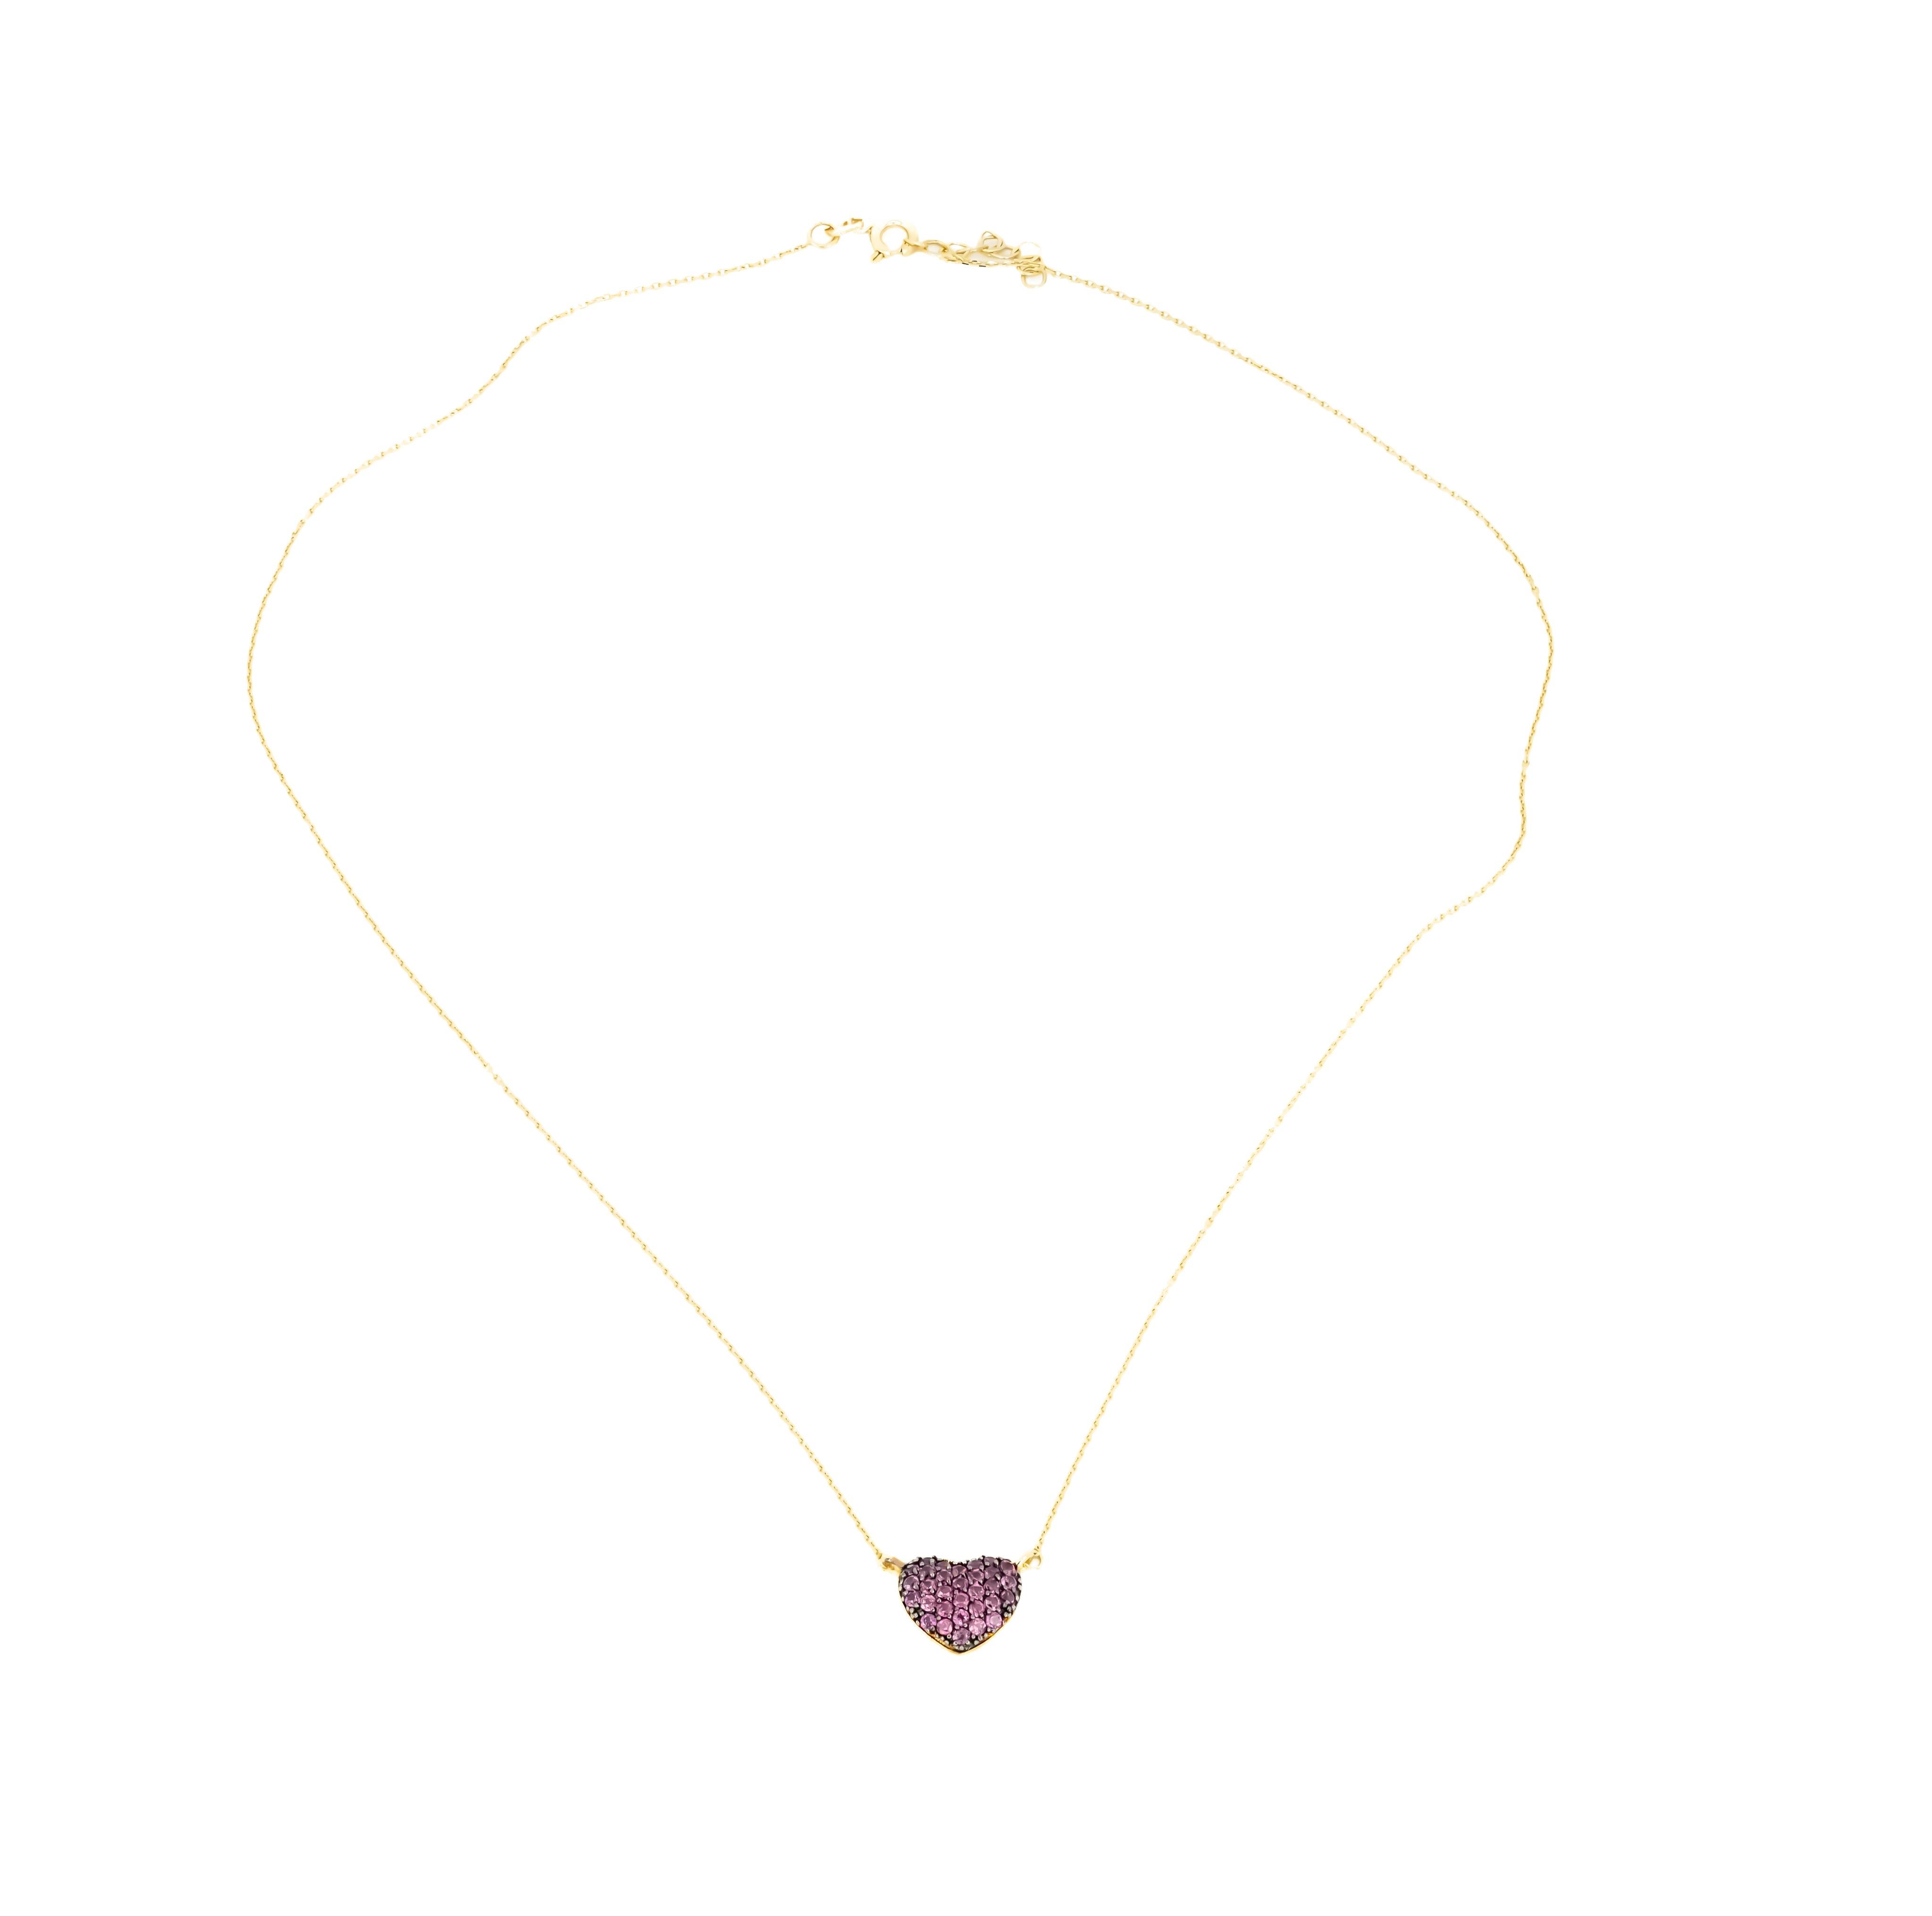 Heart shaped 14k gold pendant necklace.  1